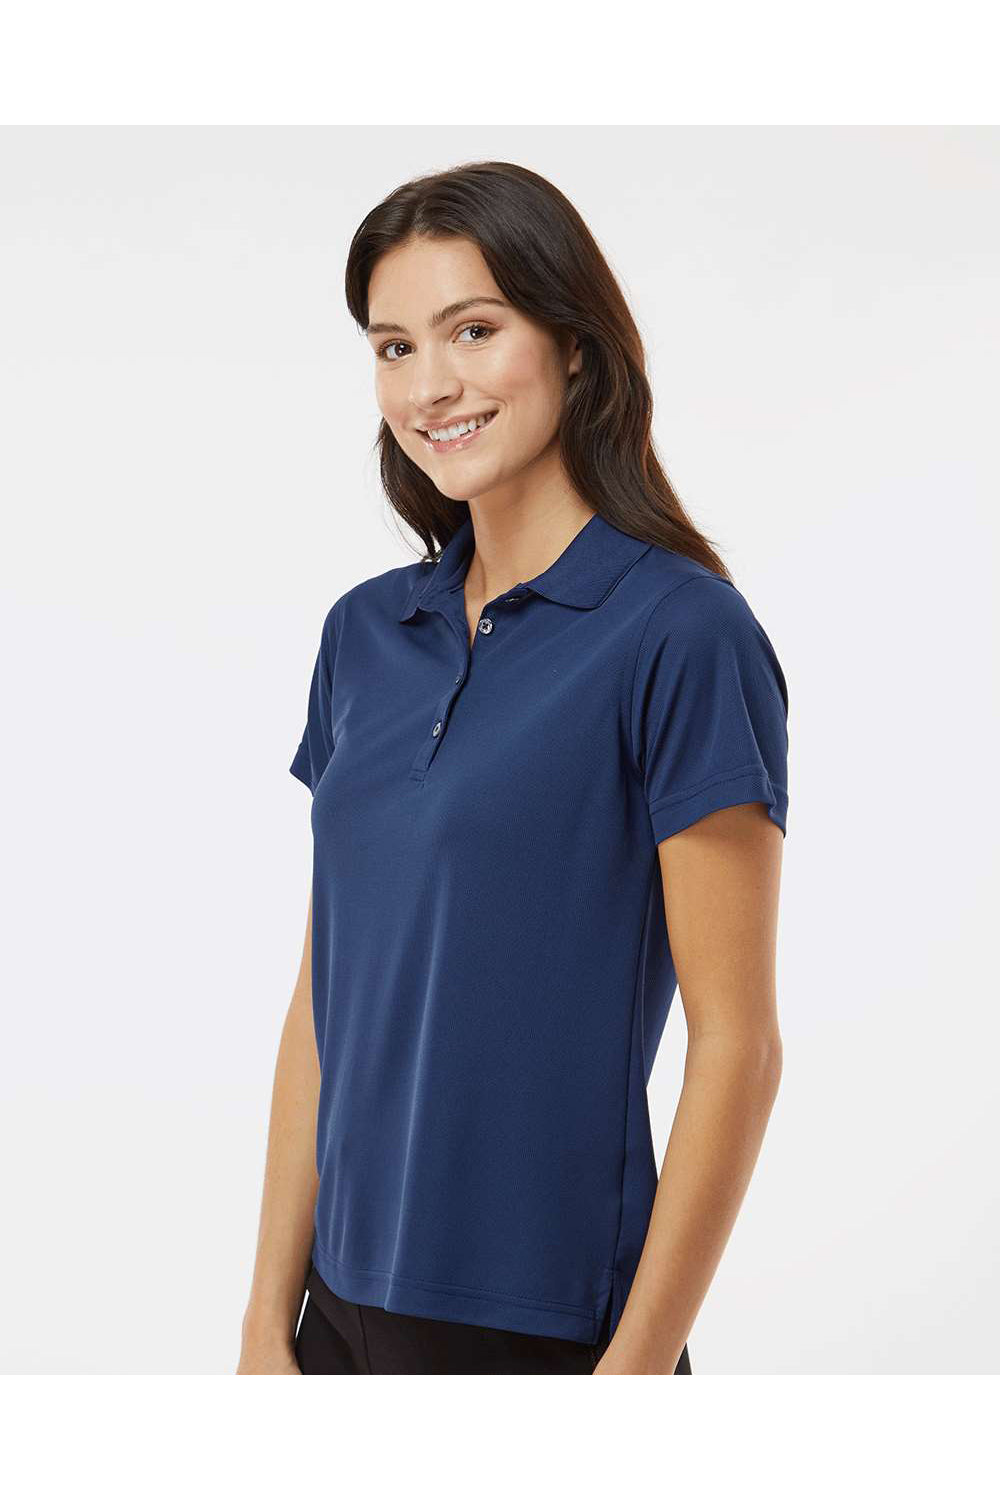 Paragon 104 Womens Saratoga Performance Mini Mesh Short Sleeve Polo Shirt Navy Blue Model Side